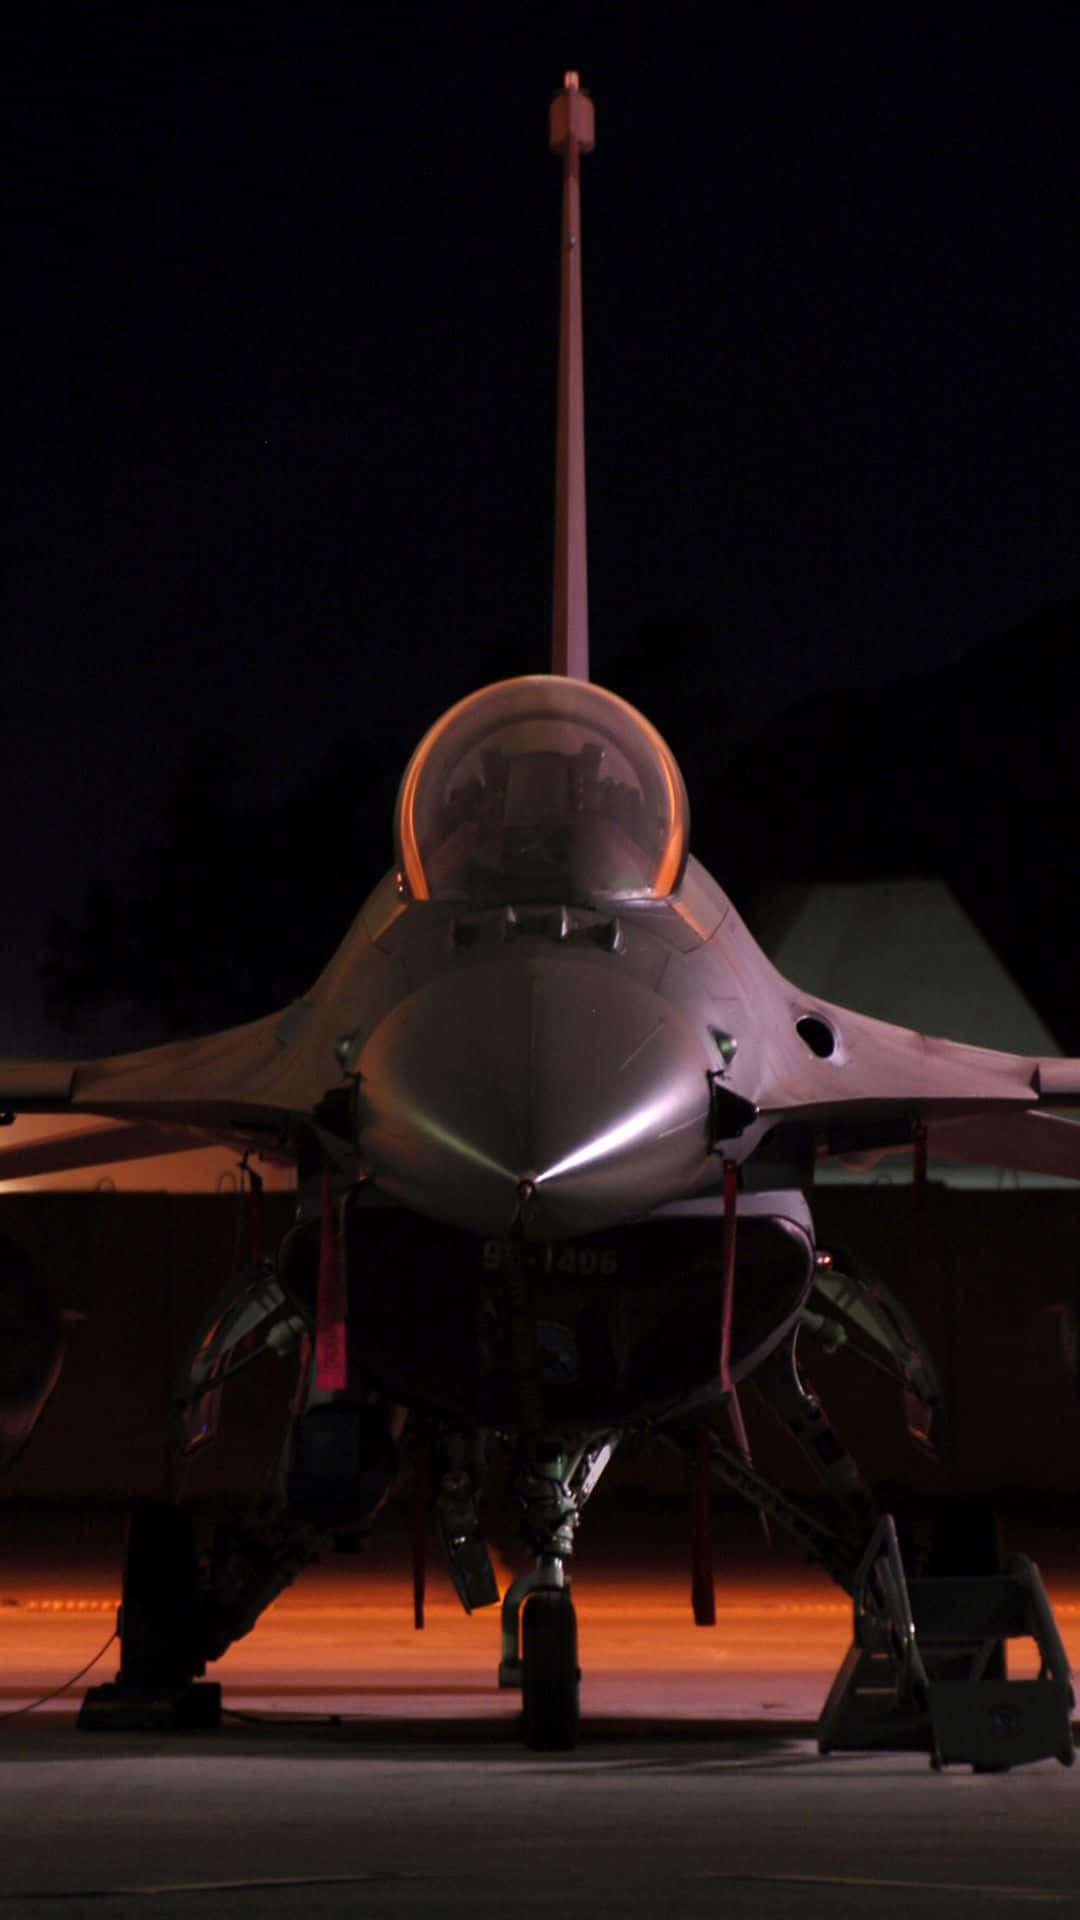 Nighttime F16 Fighter Jet Standing Ready Wallpaper